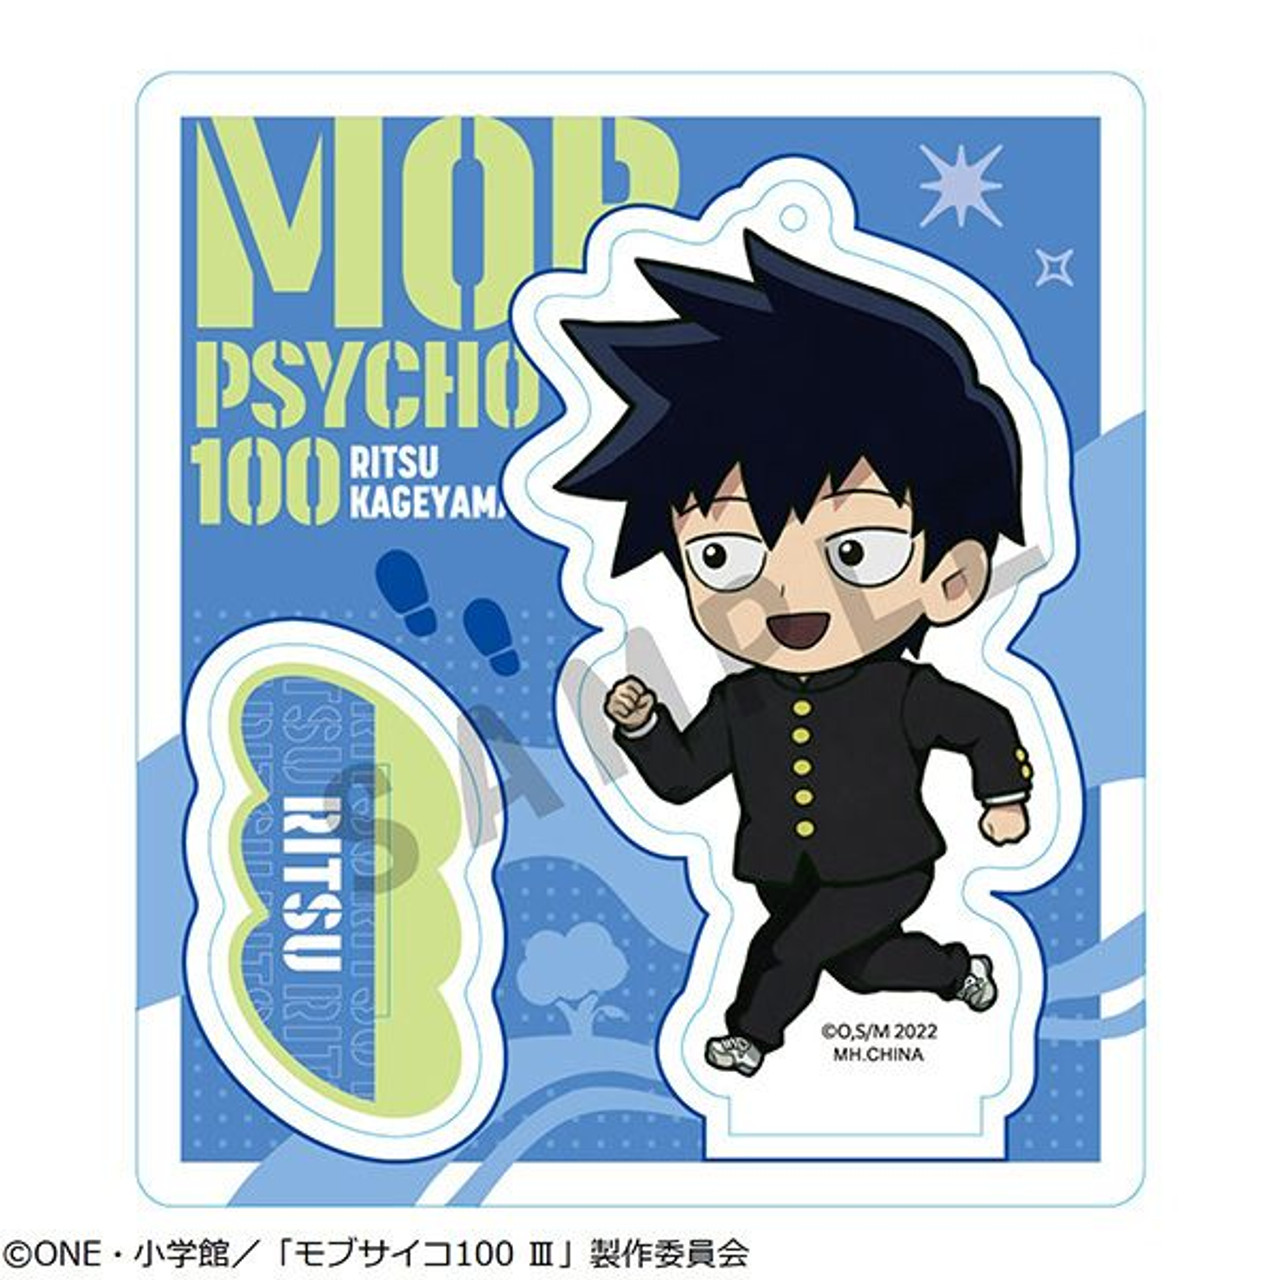 Mob Psycho 100 III - Chokorin Mascot Figure Set